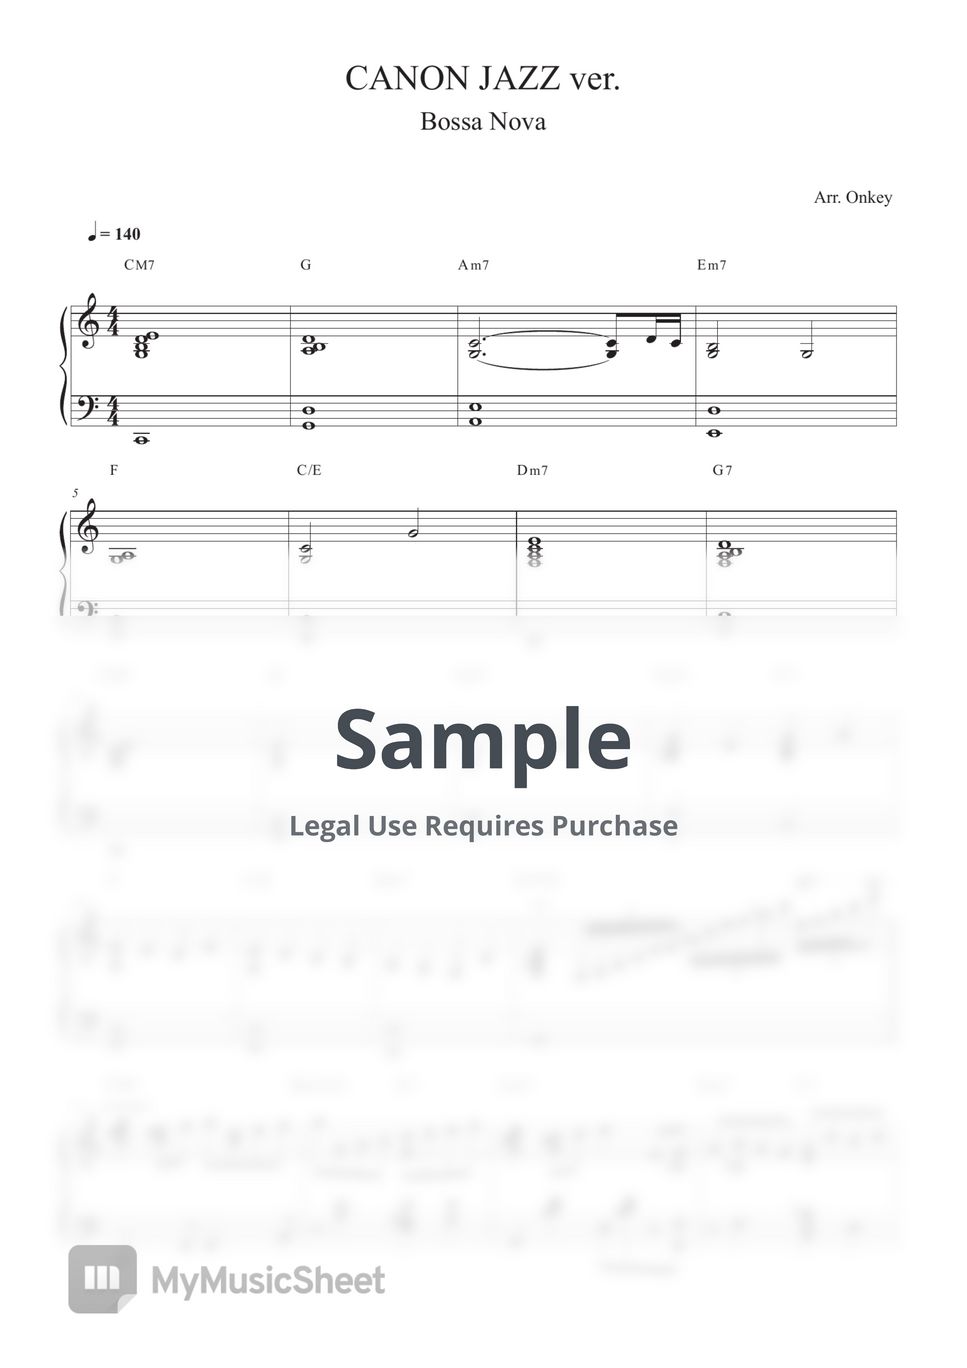 Pachelbel - Canon Jazz (Jazz Ver.) Sheets by Onkey